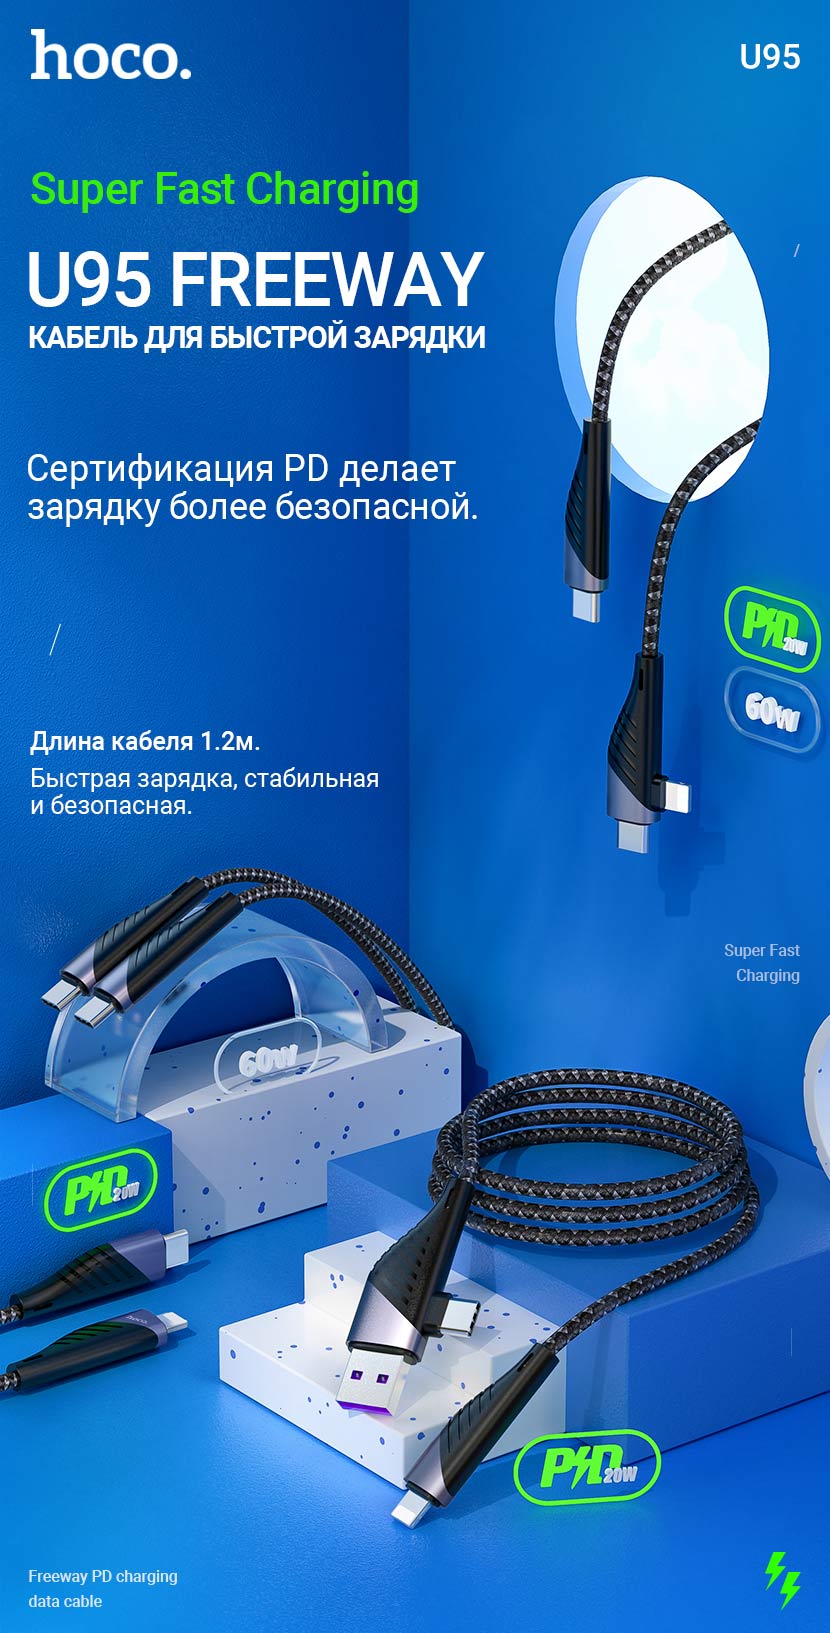 hoco news u95 freeway pd charging data cable ru